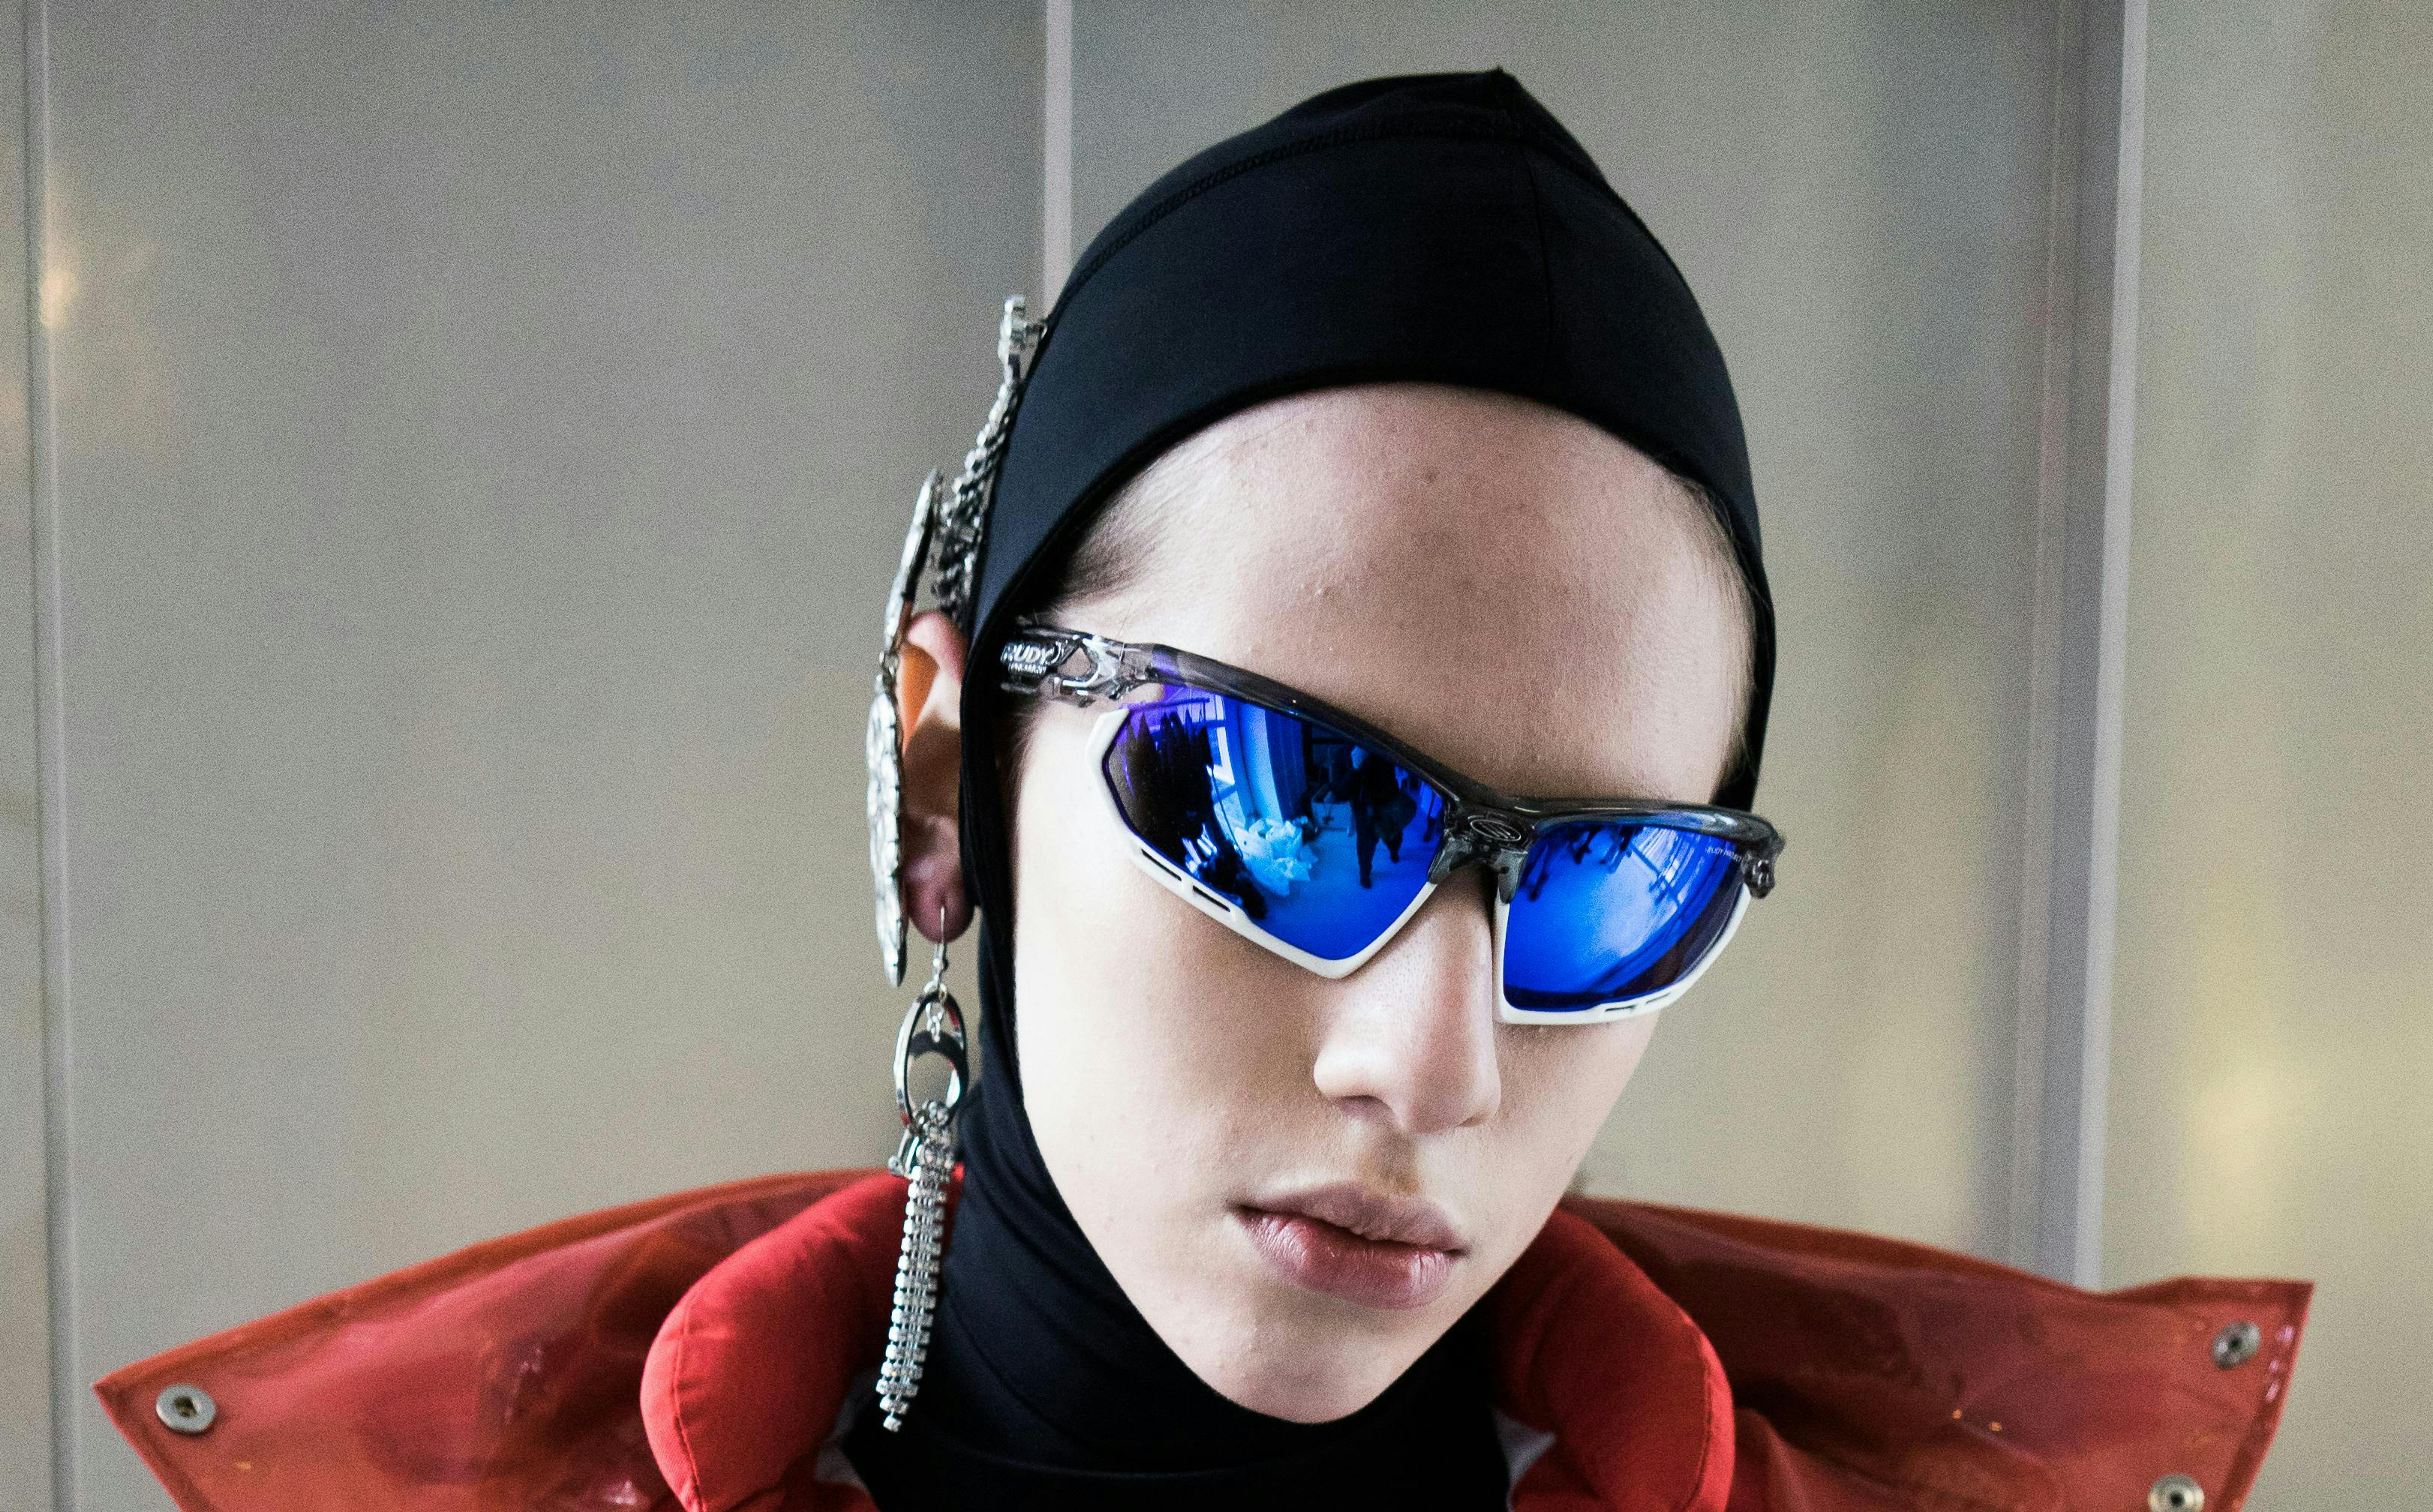 paris sunglasses accessories accessory clothing apparel person human face